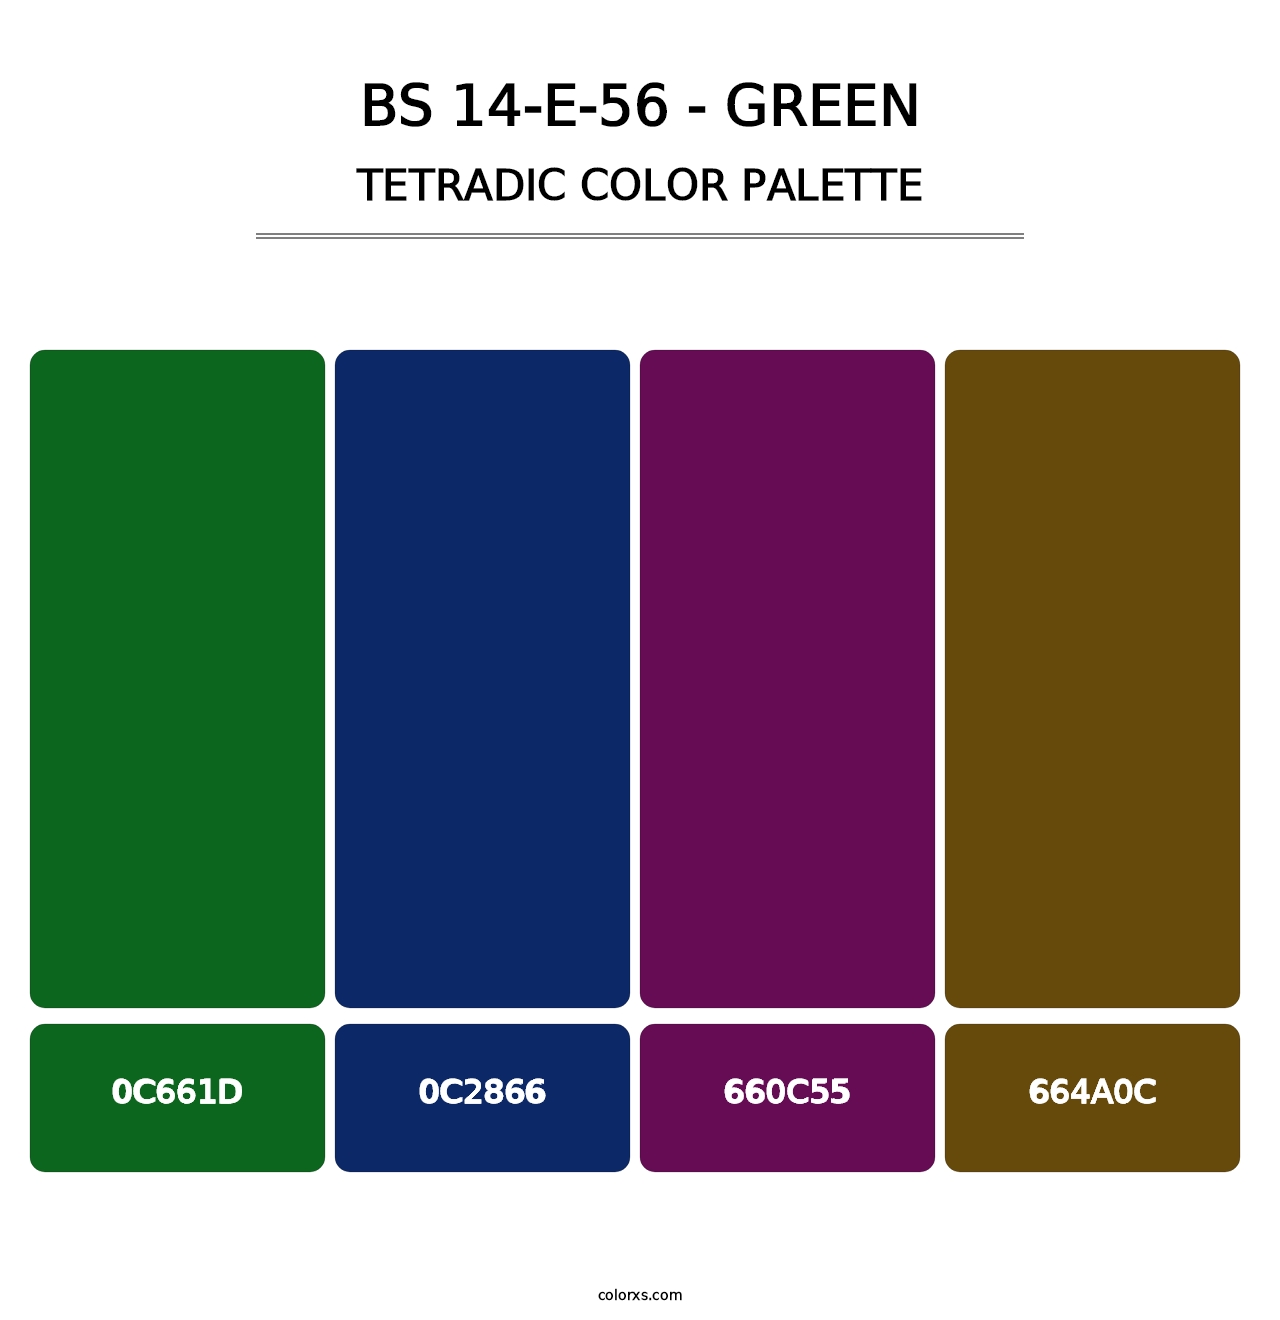 BS 14-E-56 - Green - Tetradic Color Palette